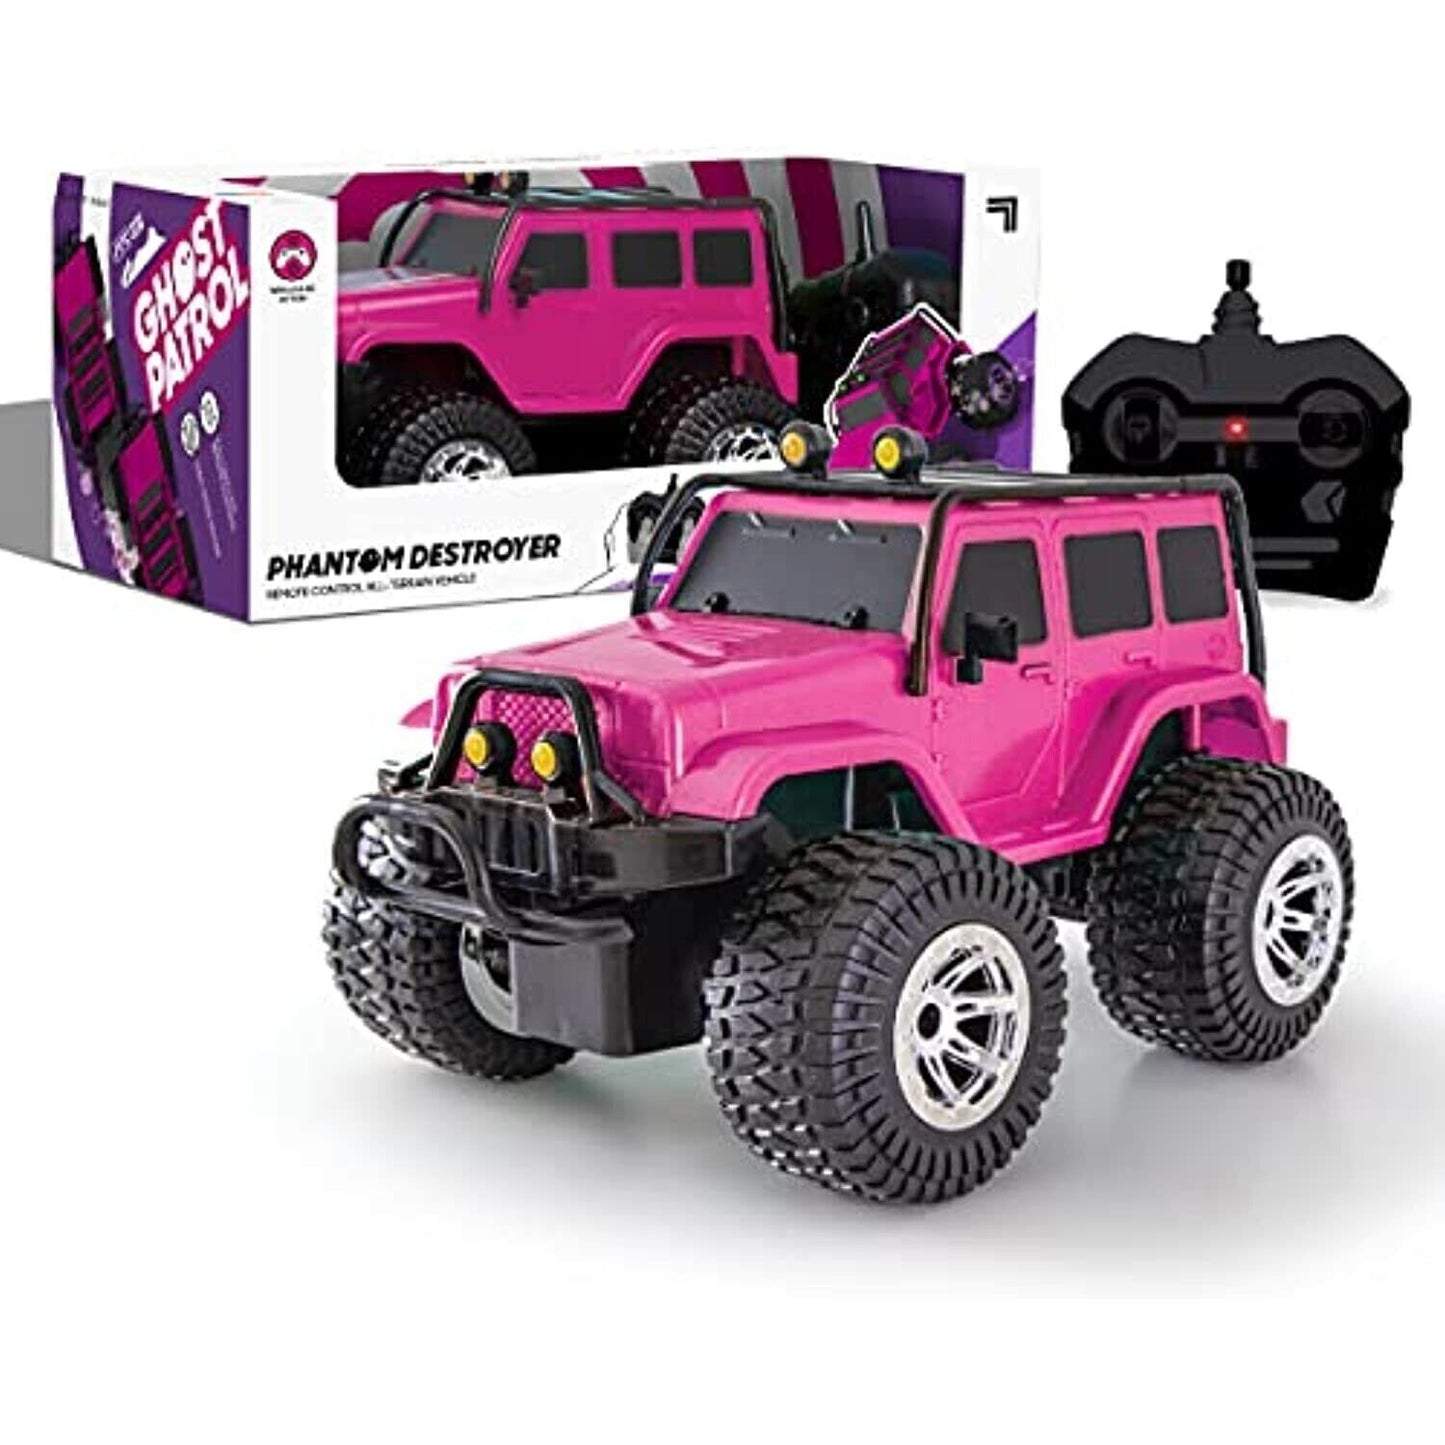 Sharper Image Remote Control All-Terrain Phantom Destroyer Toy Car Pink - Open Box